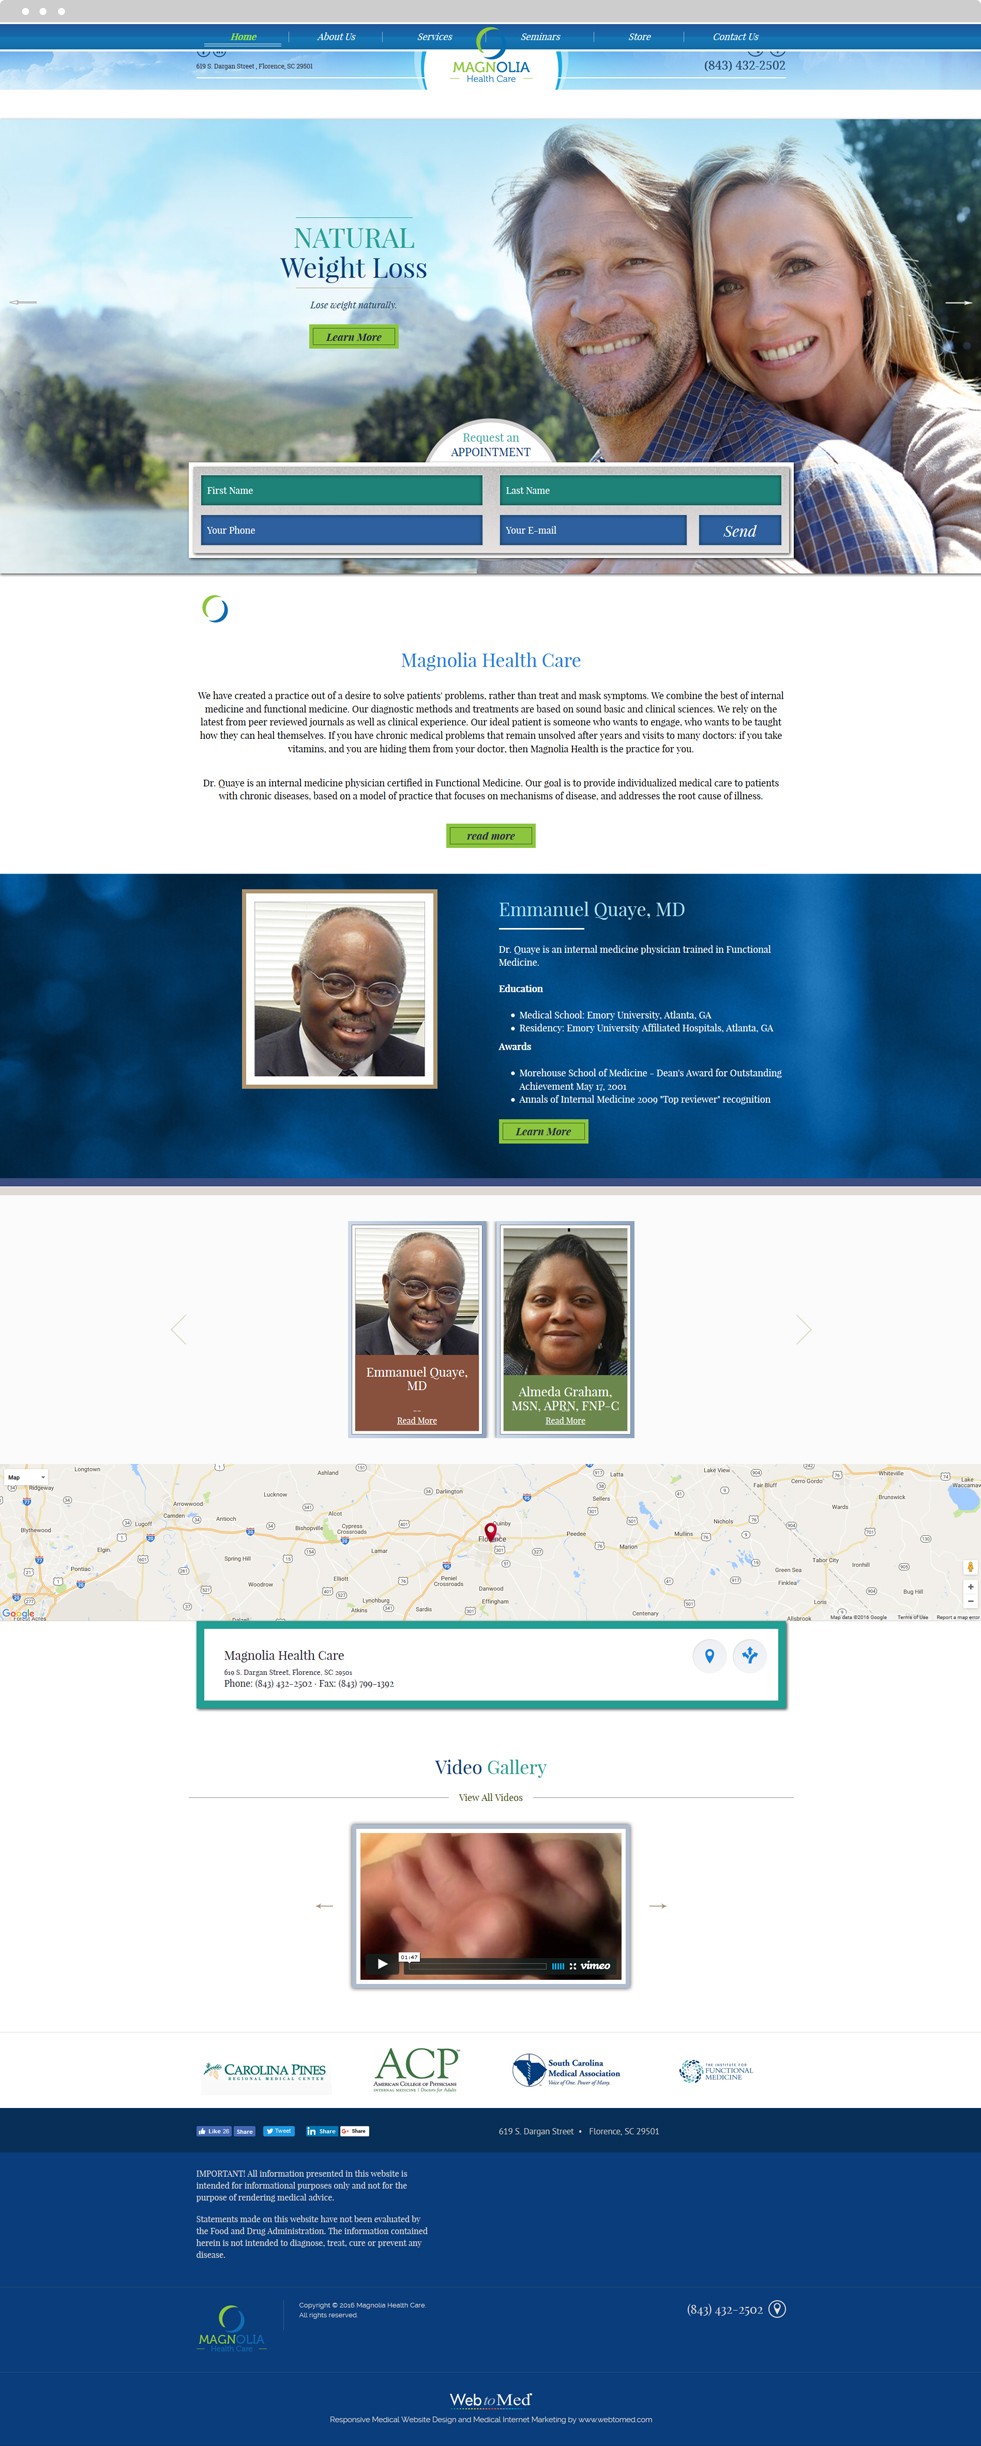 Functional Medicine Website Design - Magnolia Health Care - Homepage